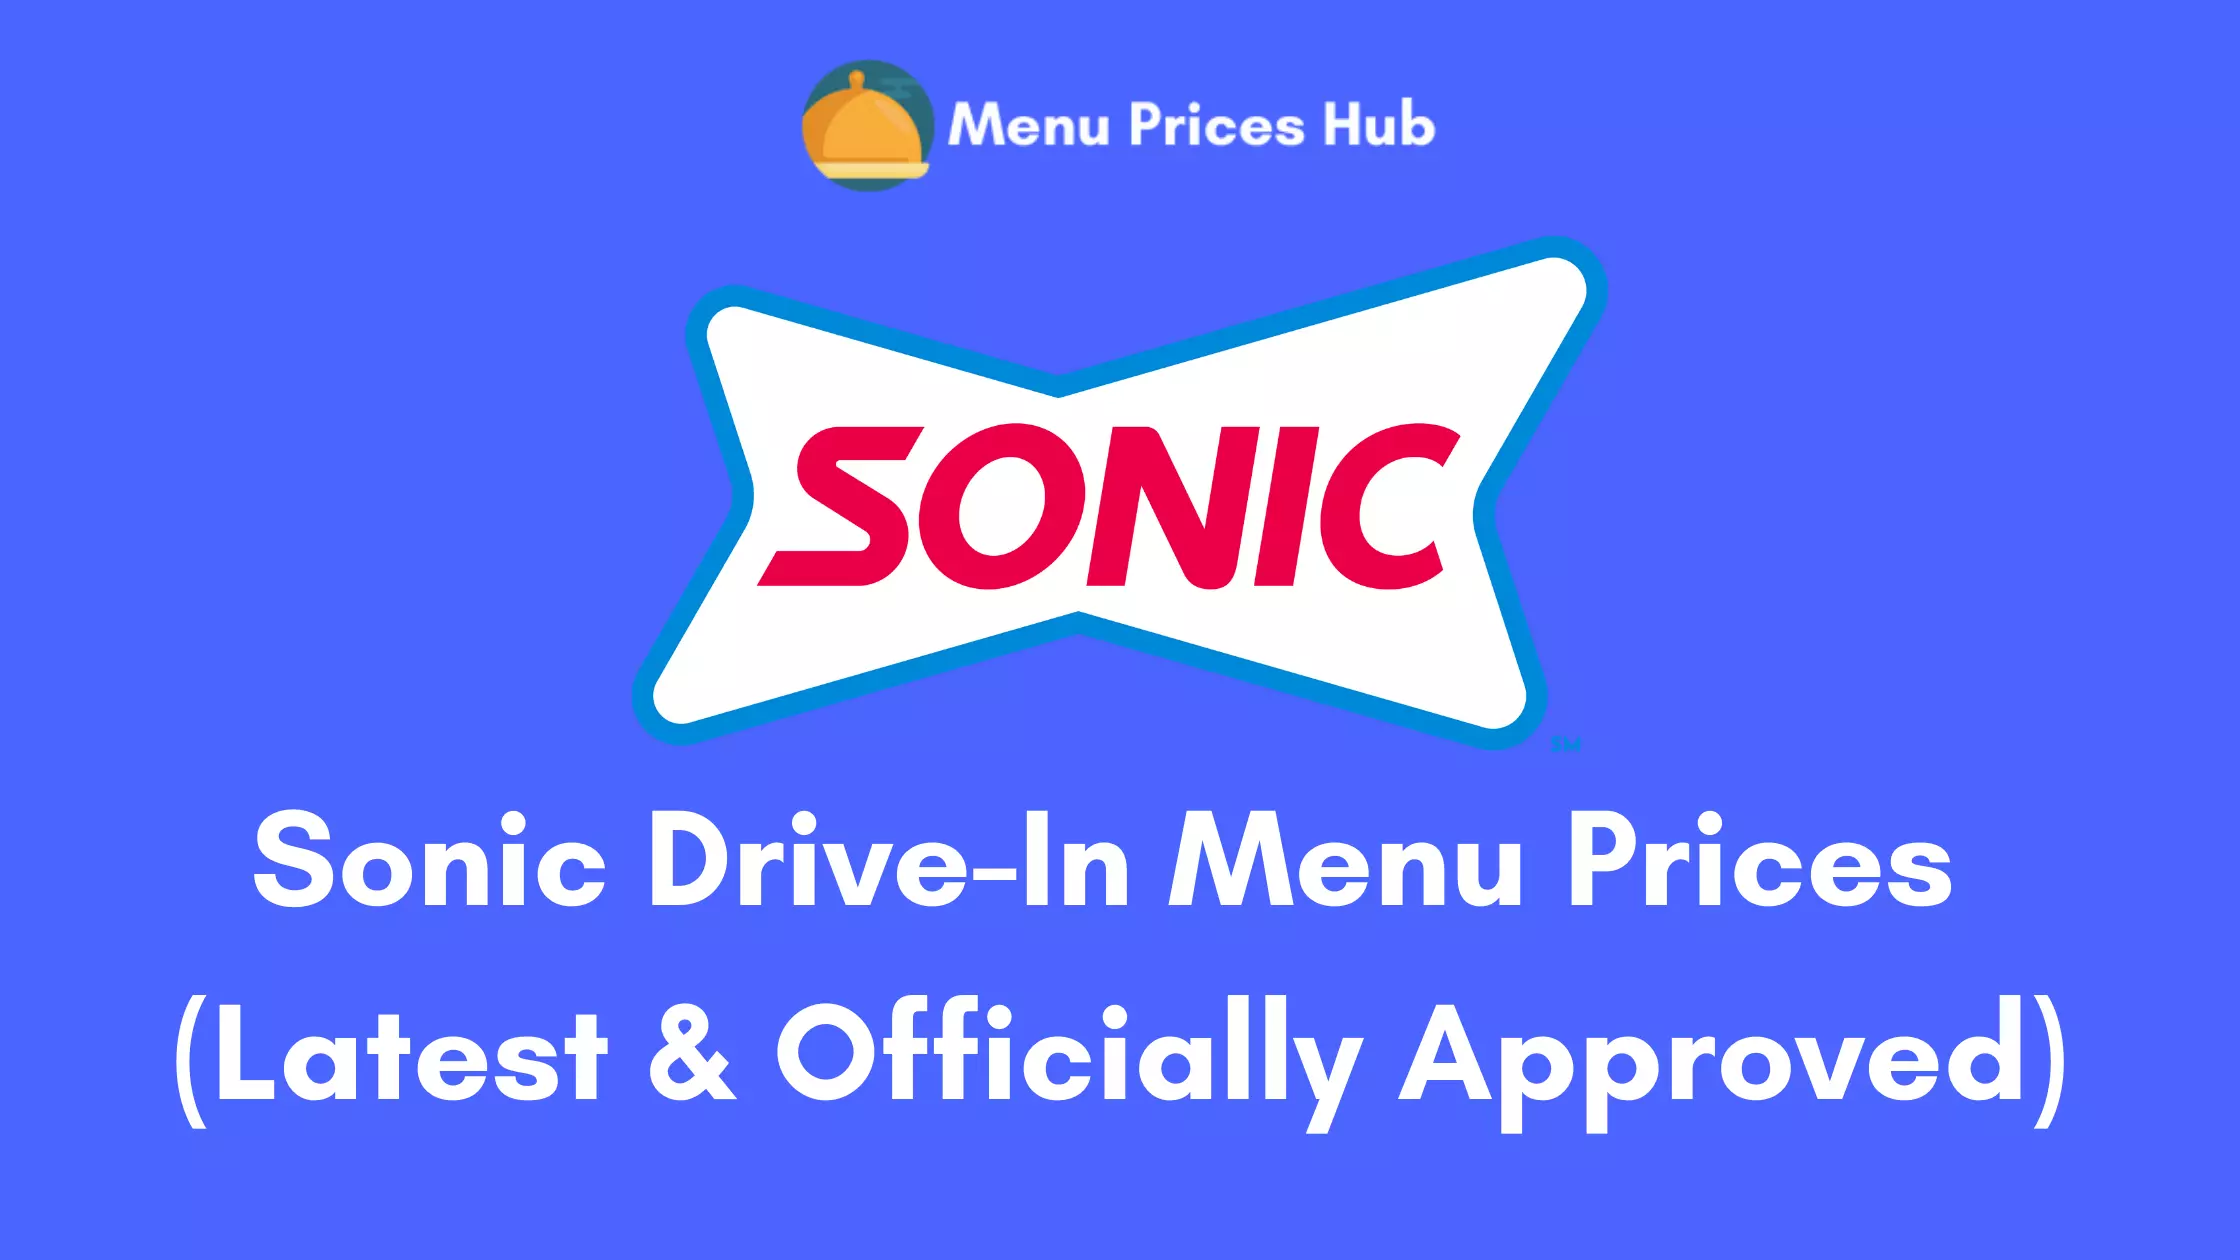 Sonic Menu Prices